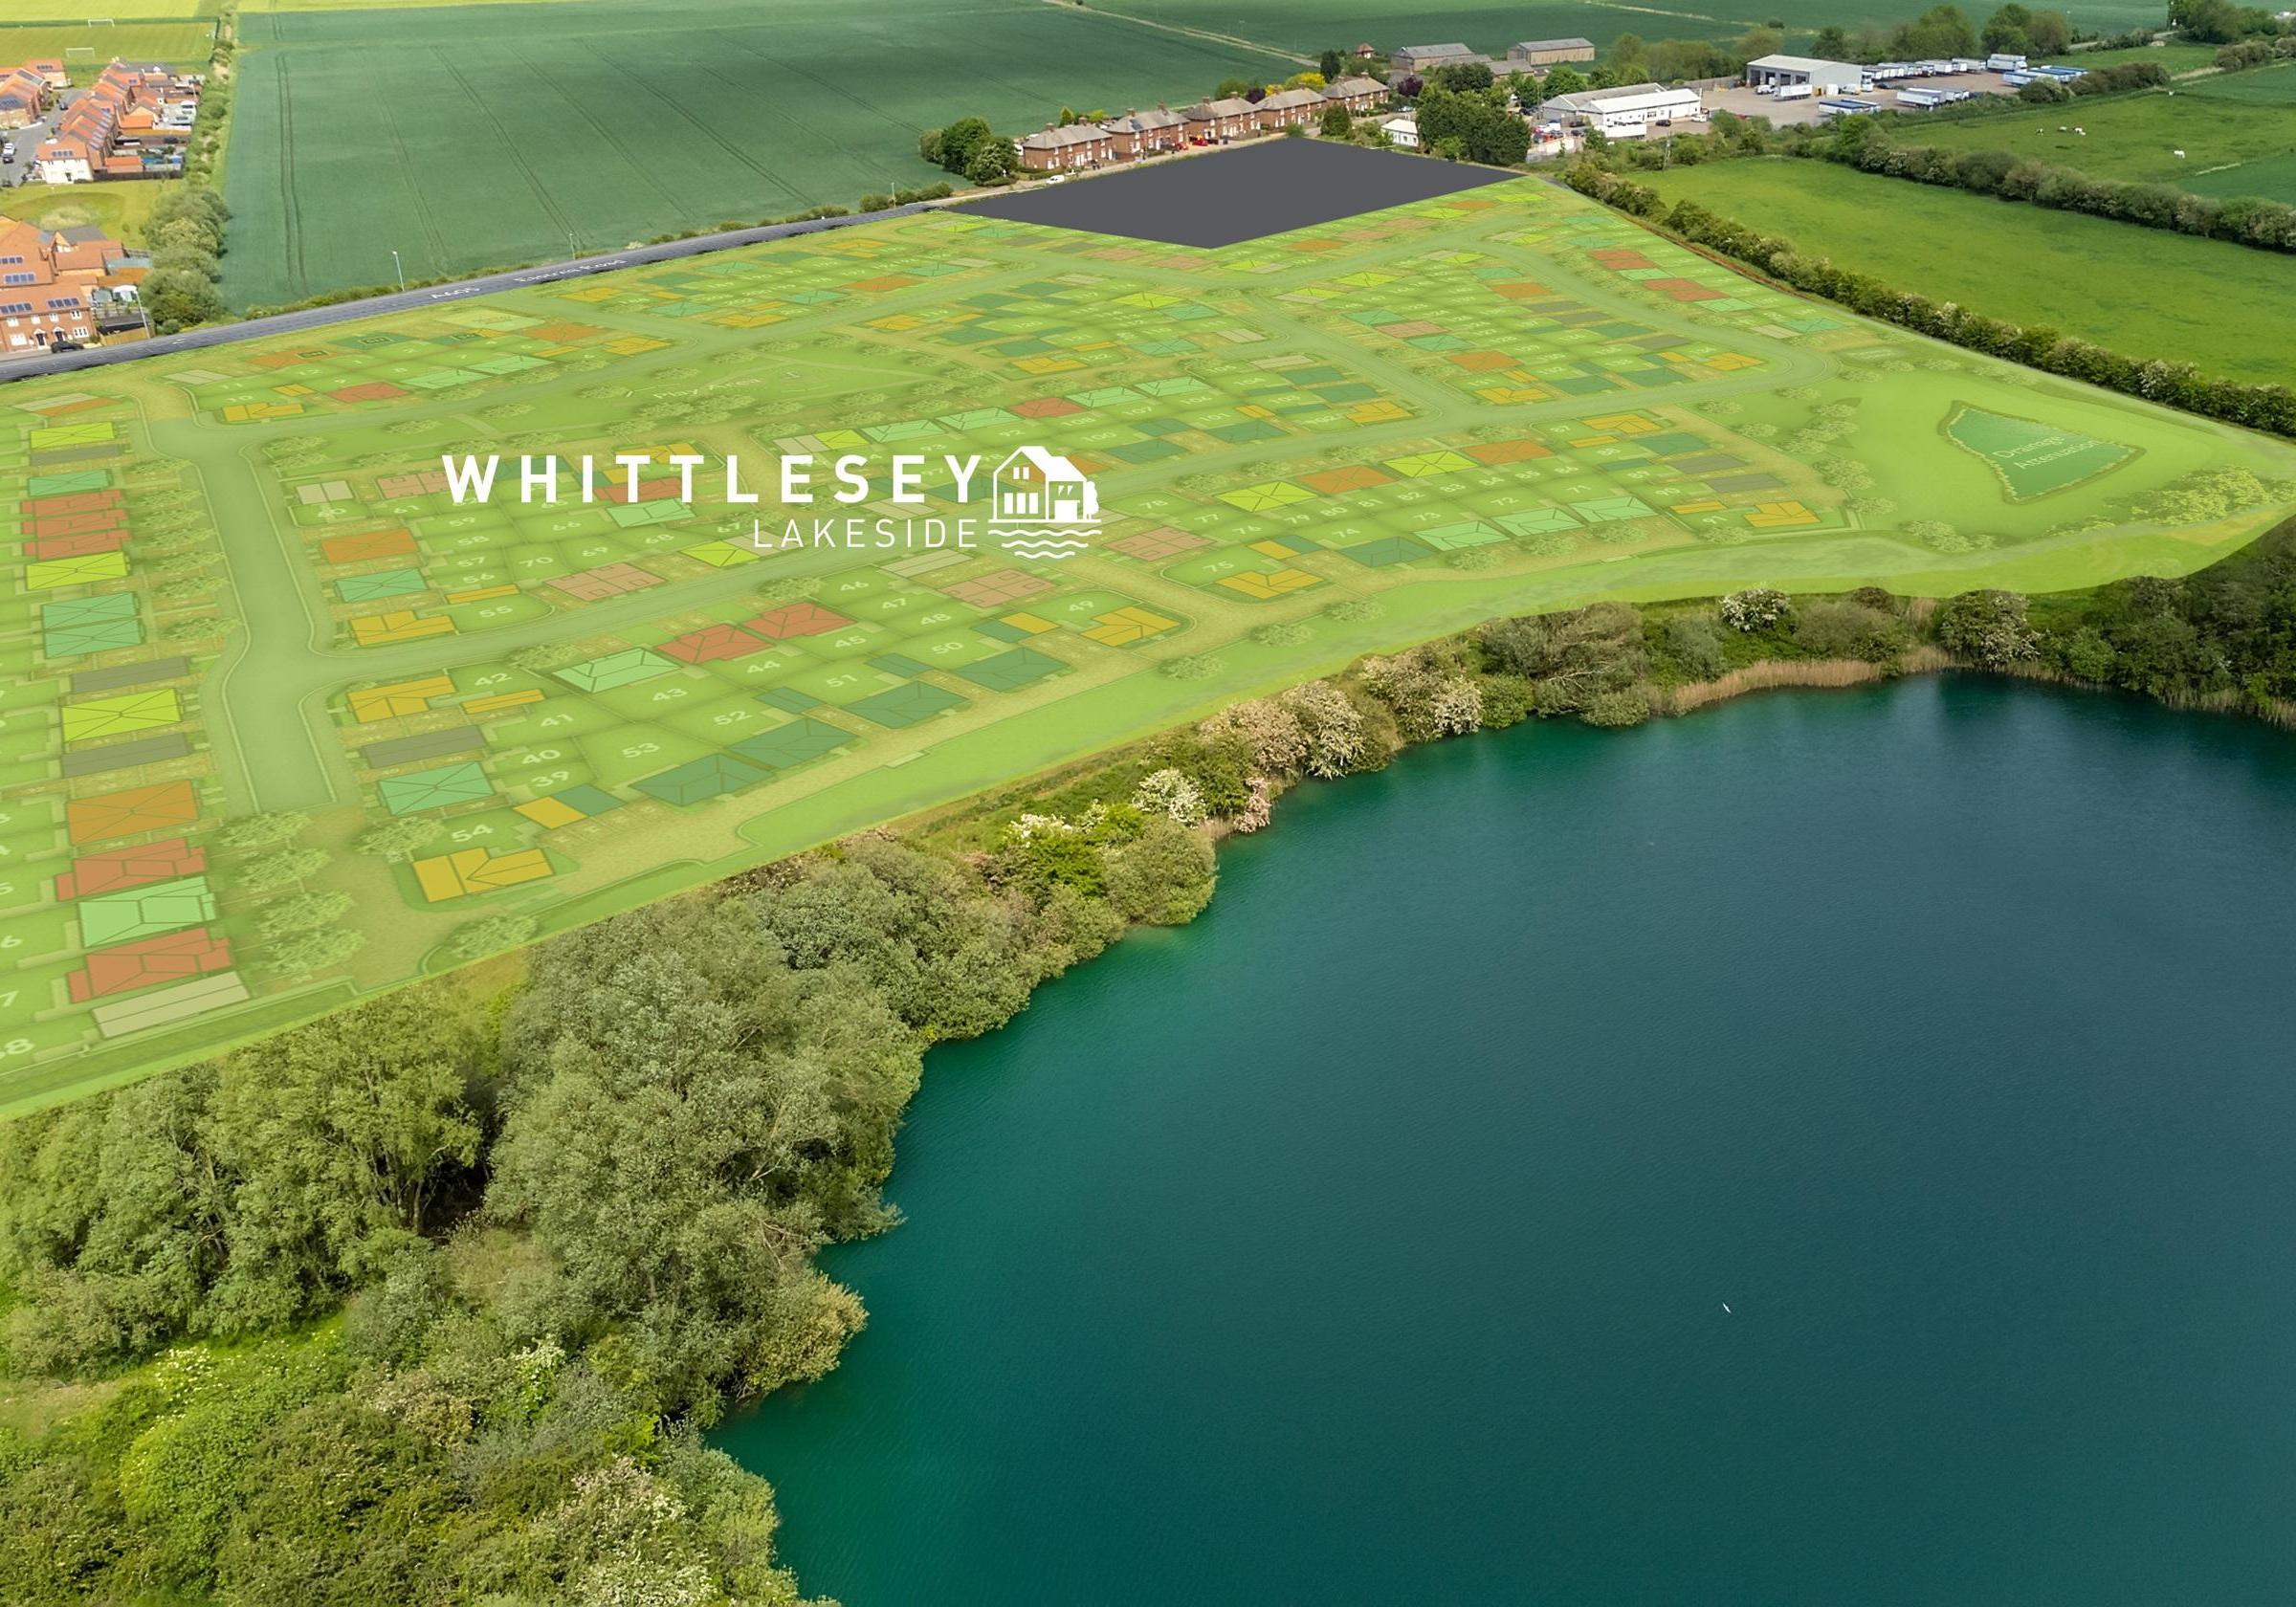 Whittlesey Lakeside development 1 of 3